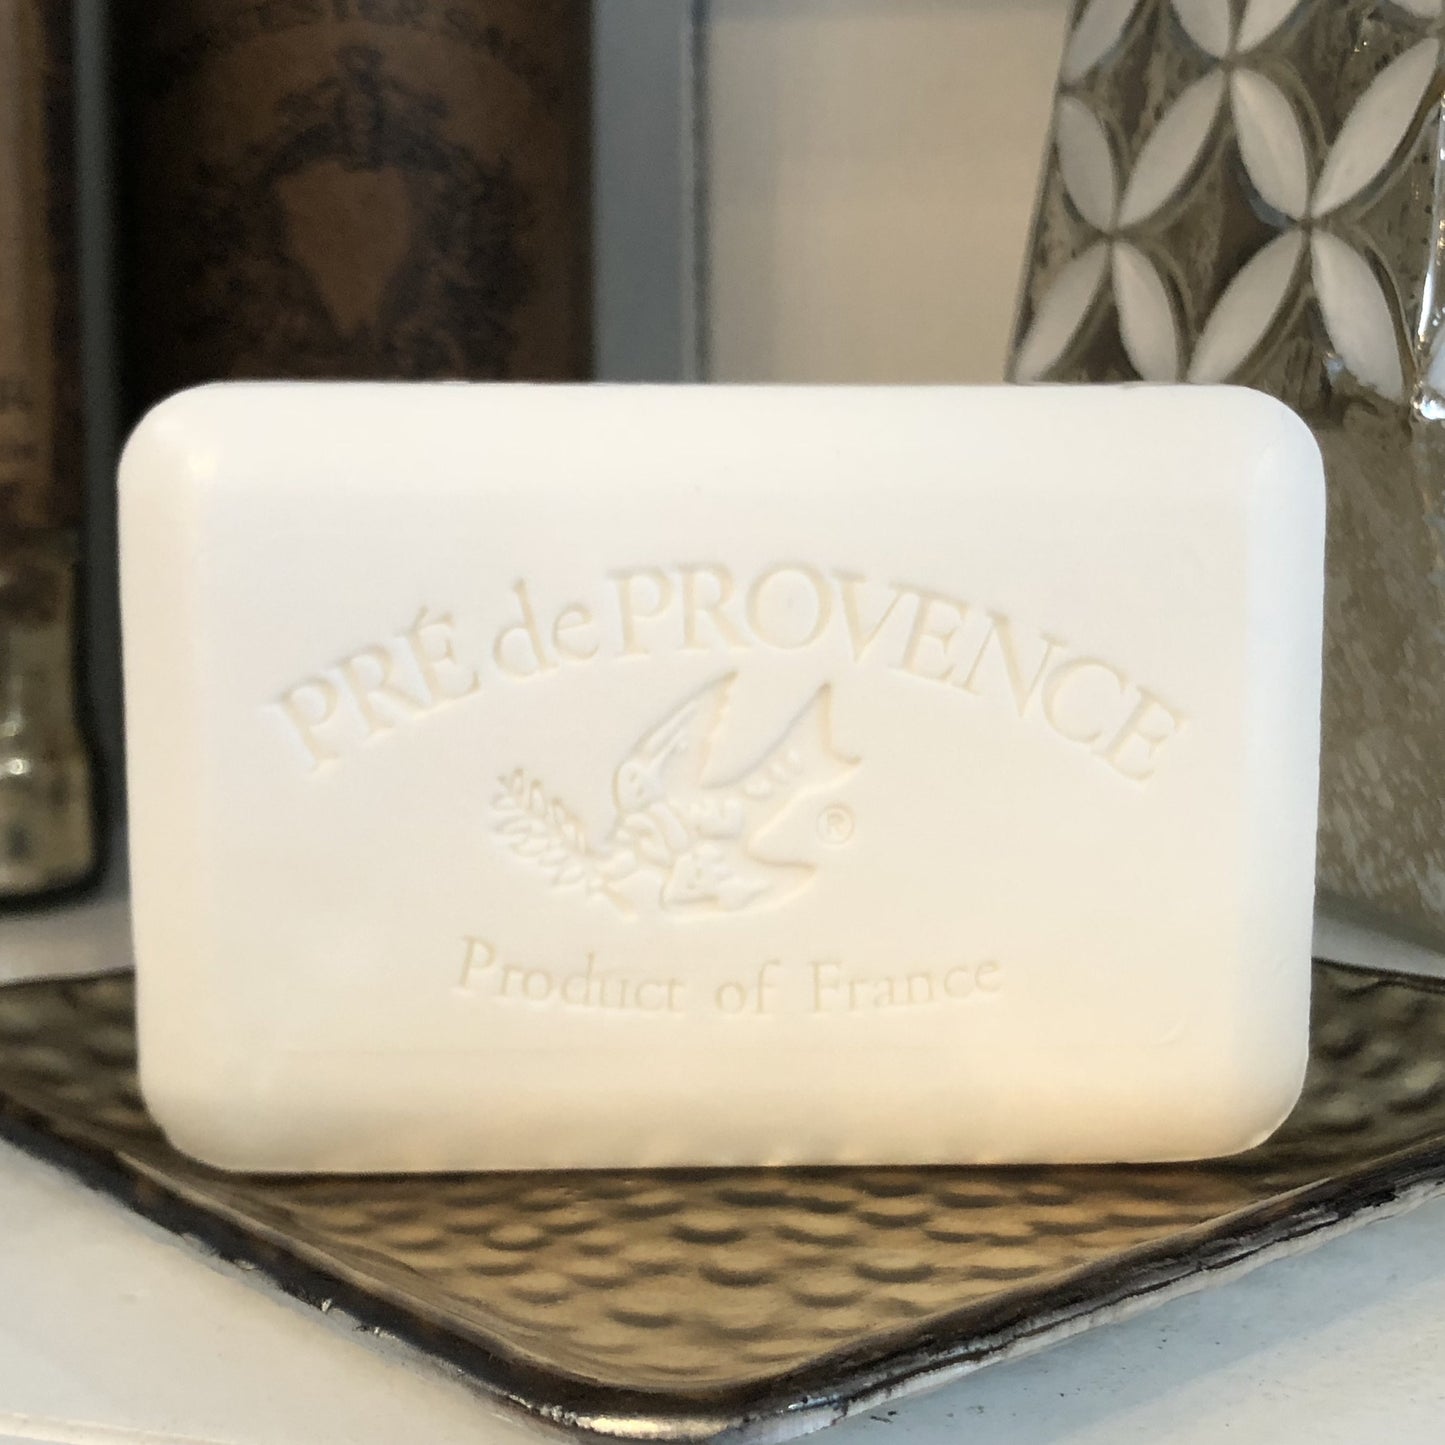 Pre de Provence Soap - Milk